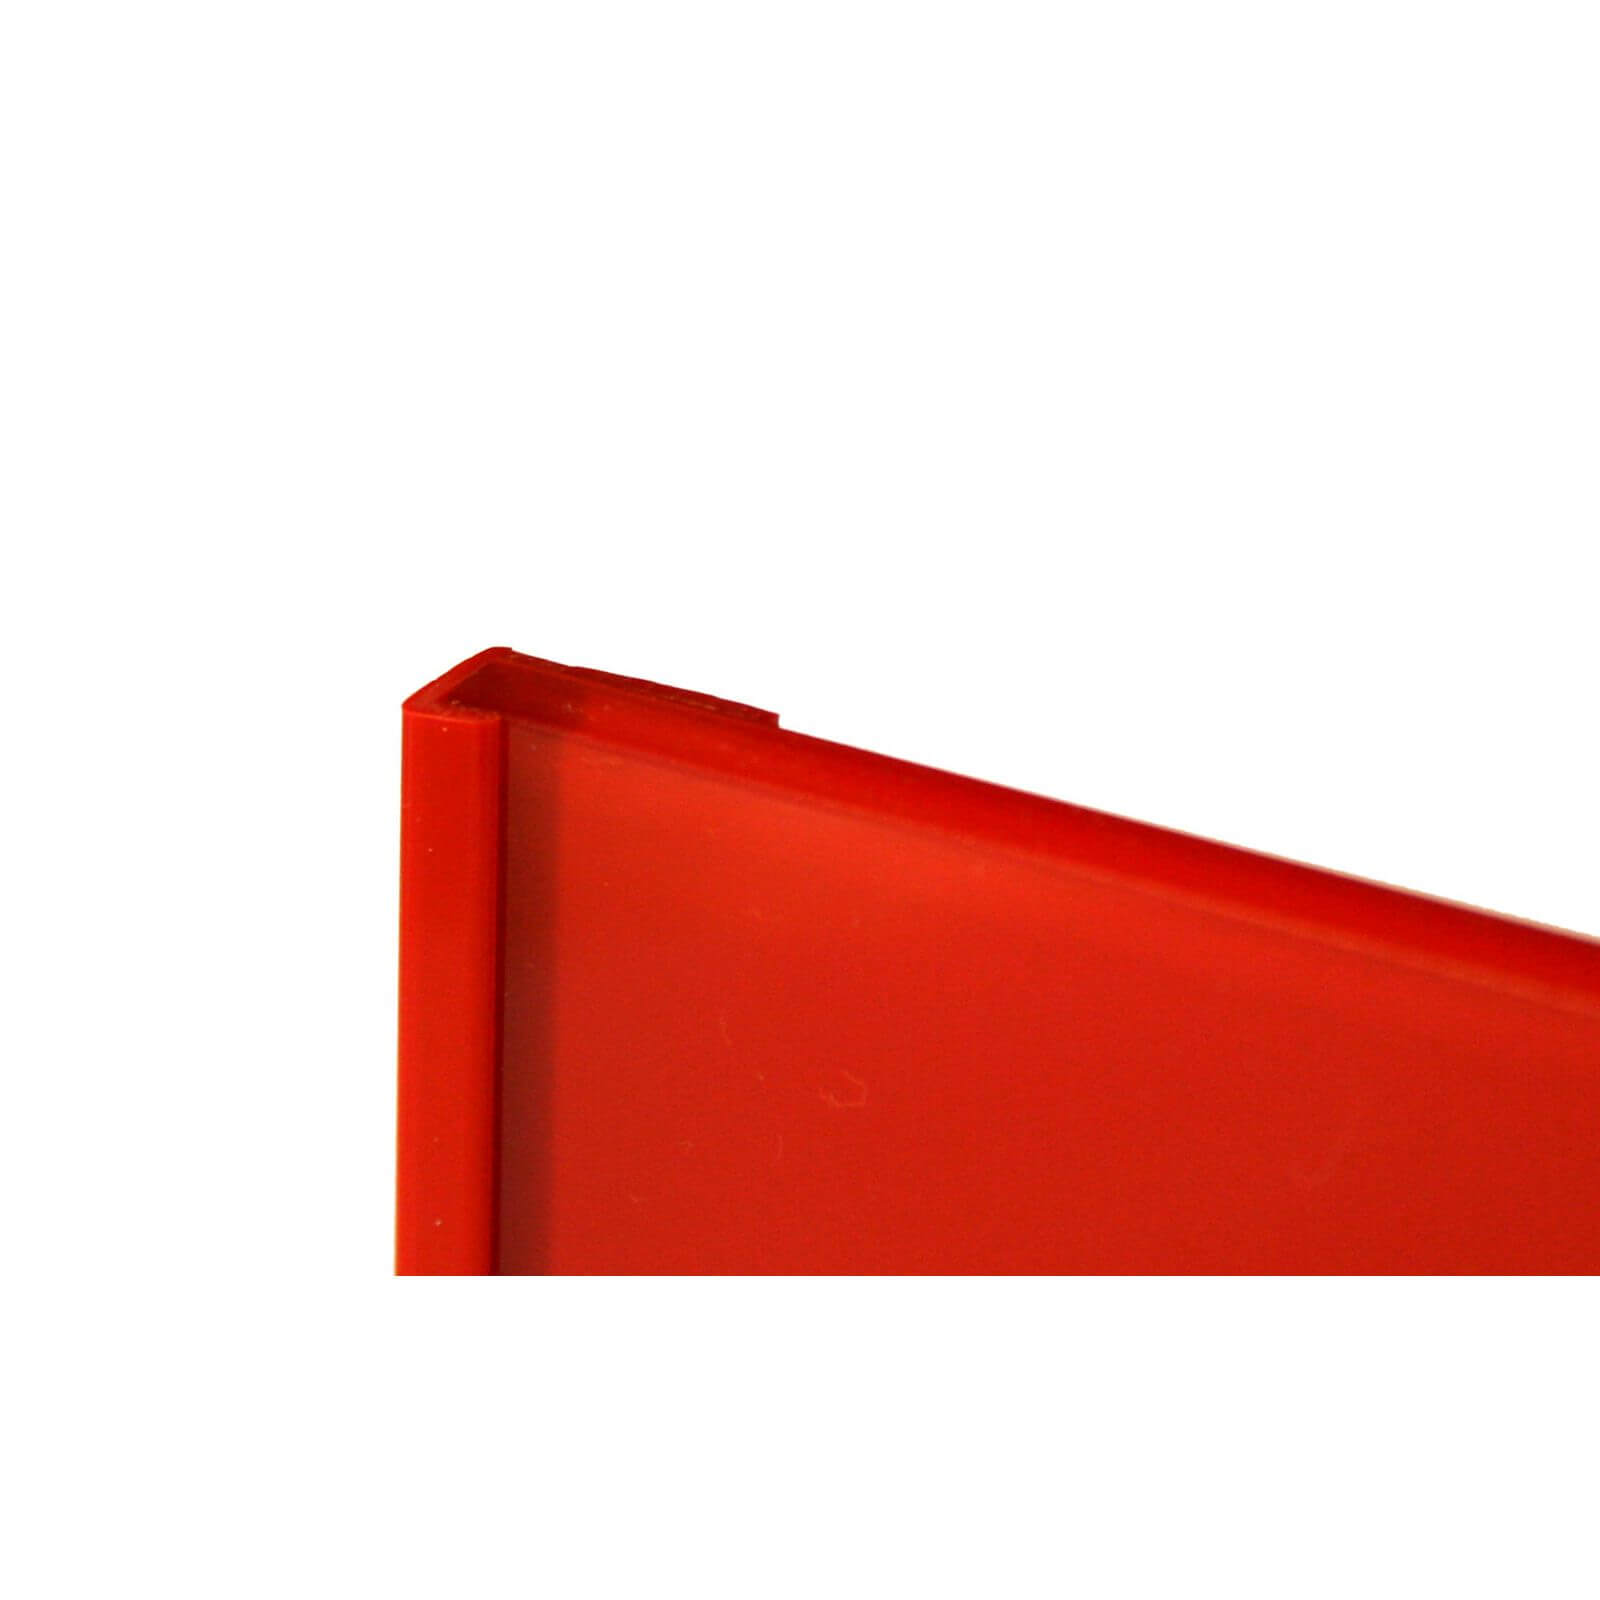 Photo of Zenolite Colour Matched Pvc Edge Cap - 2500mm - Red